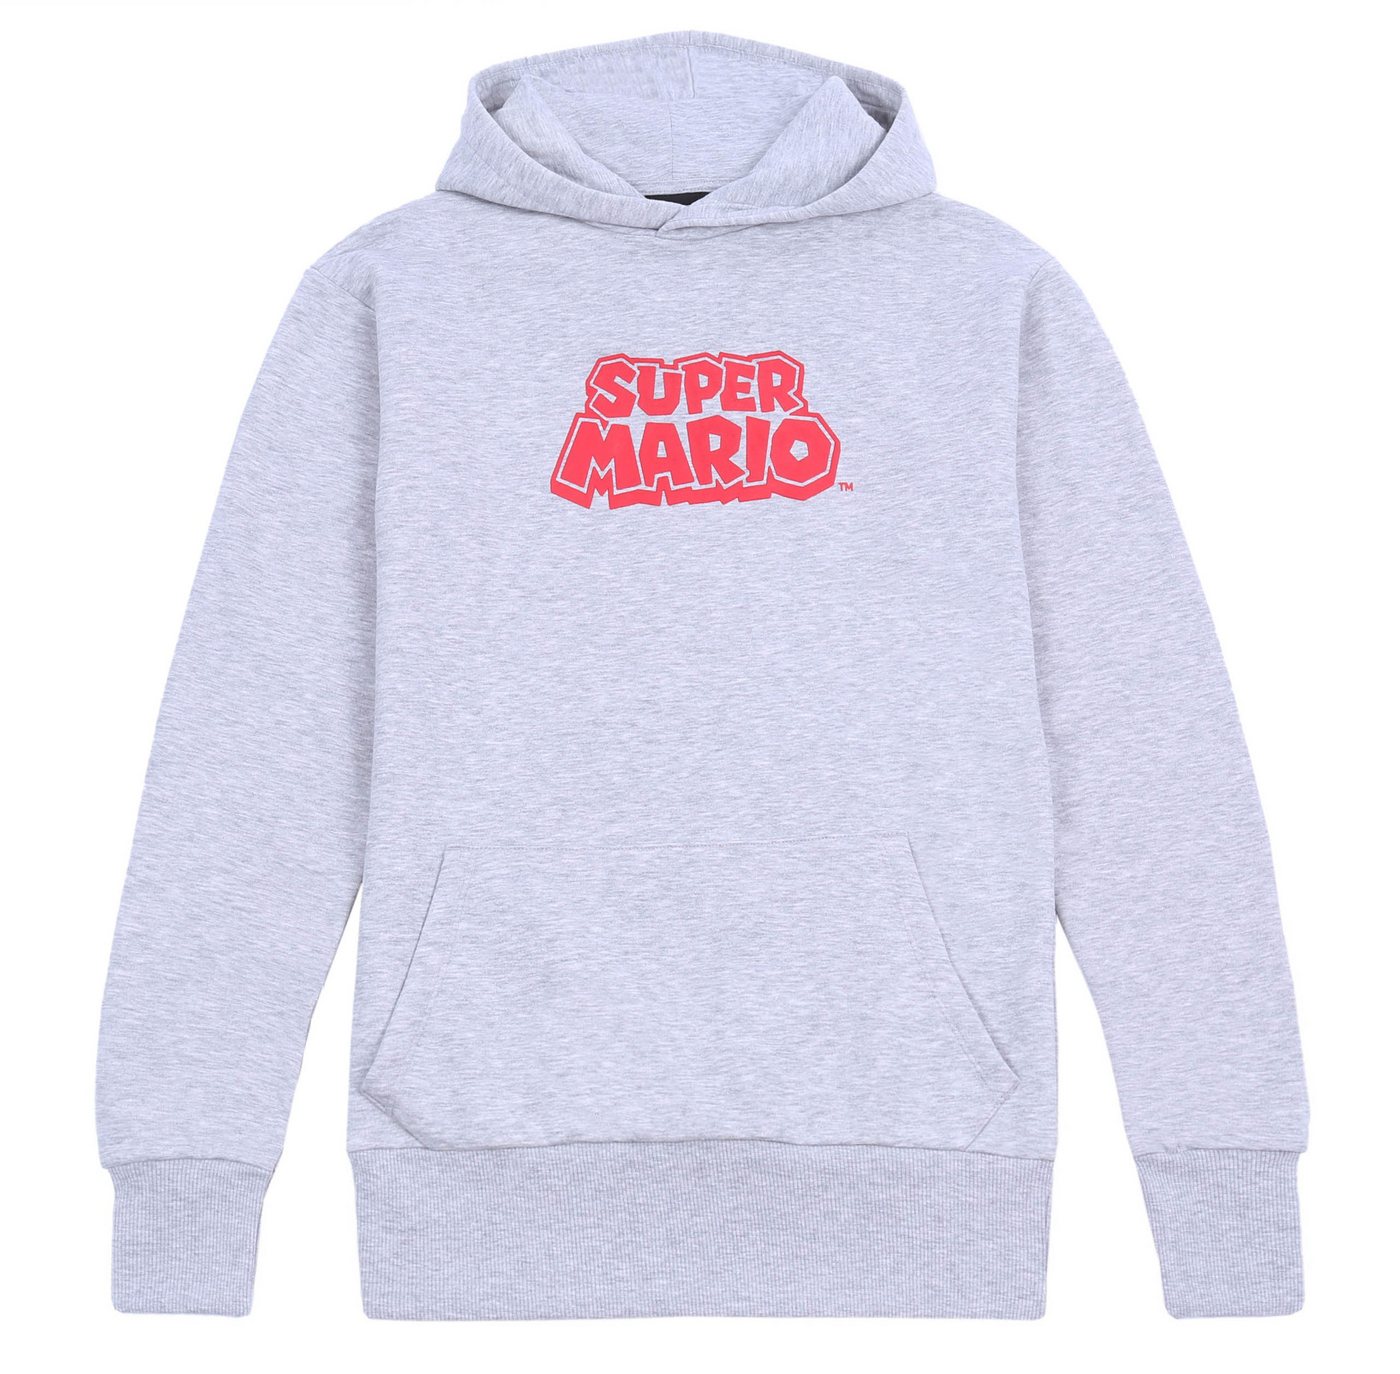 Sarcia.eu Kapuzensweatshirt Super Mario Bluse/Kapuzenpullover für Herren, grau S von Sarcia.eu